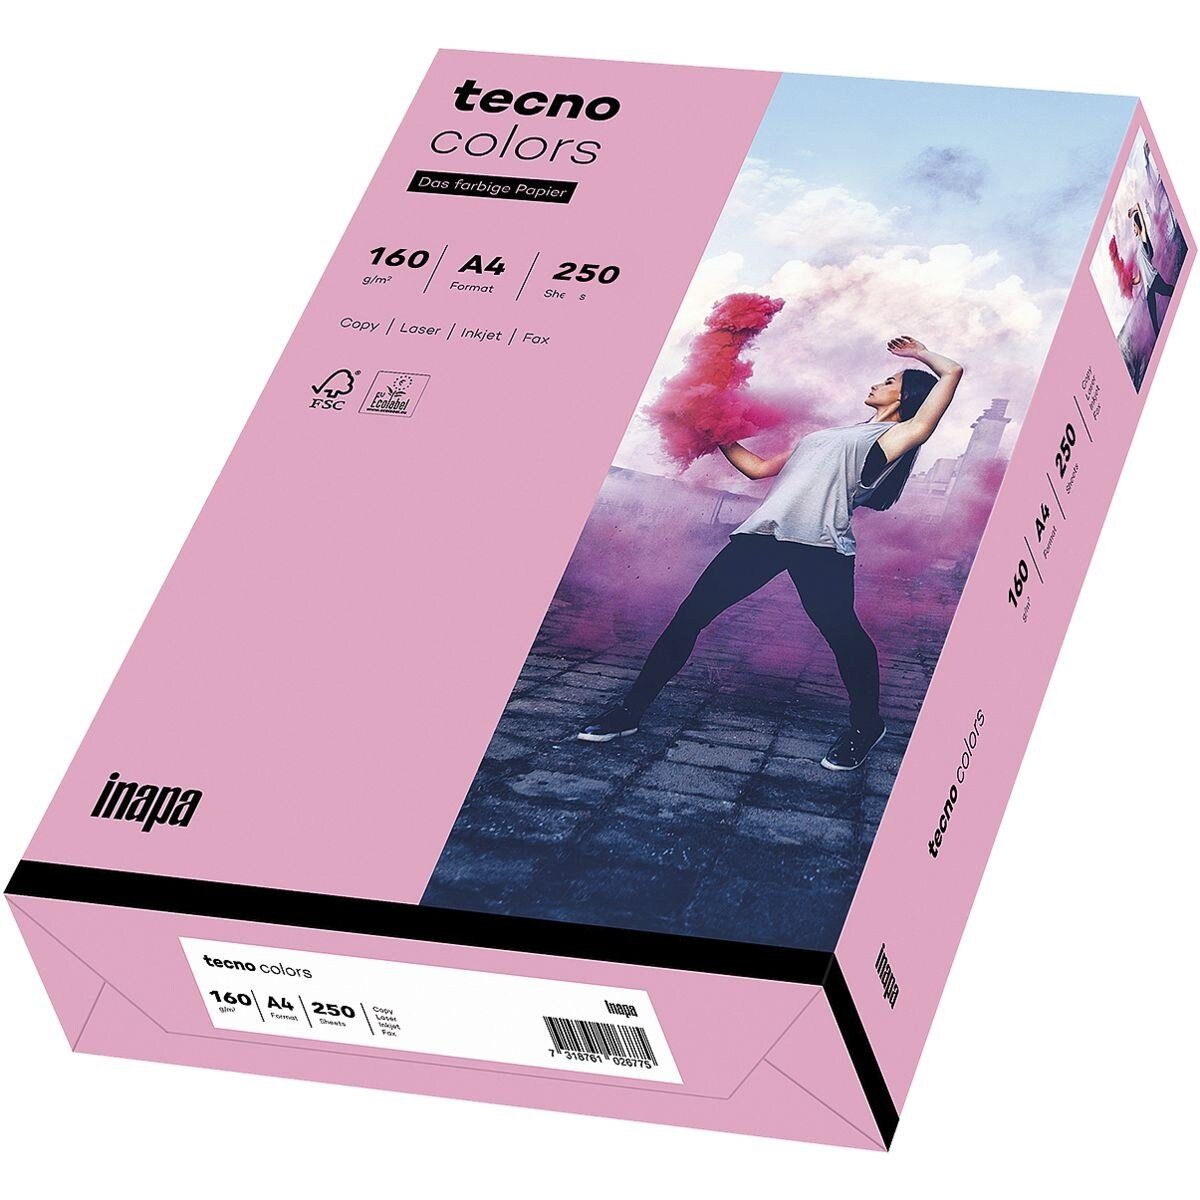 rosa und A4, 160 g/m², Colors, Drucker- Rainbow Format Blatt Kopierpapier DIN Pastellfarben, 250 Inapa / tecno tecno